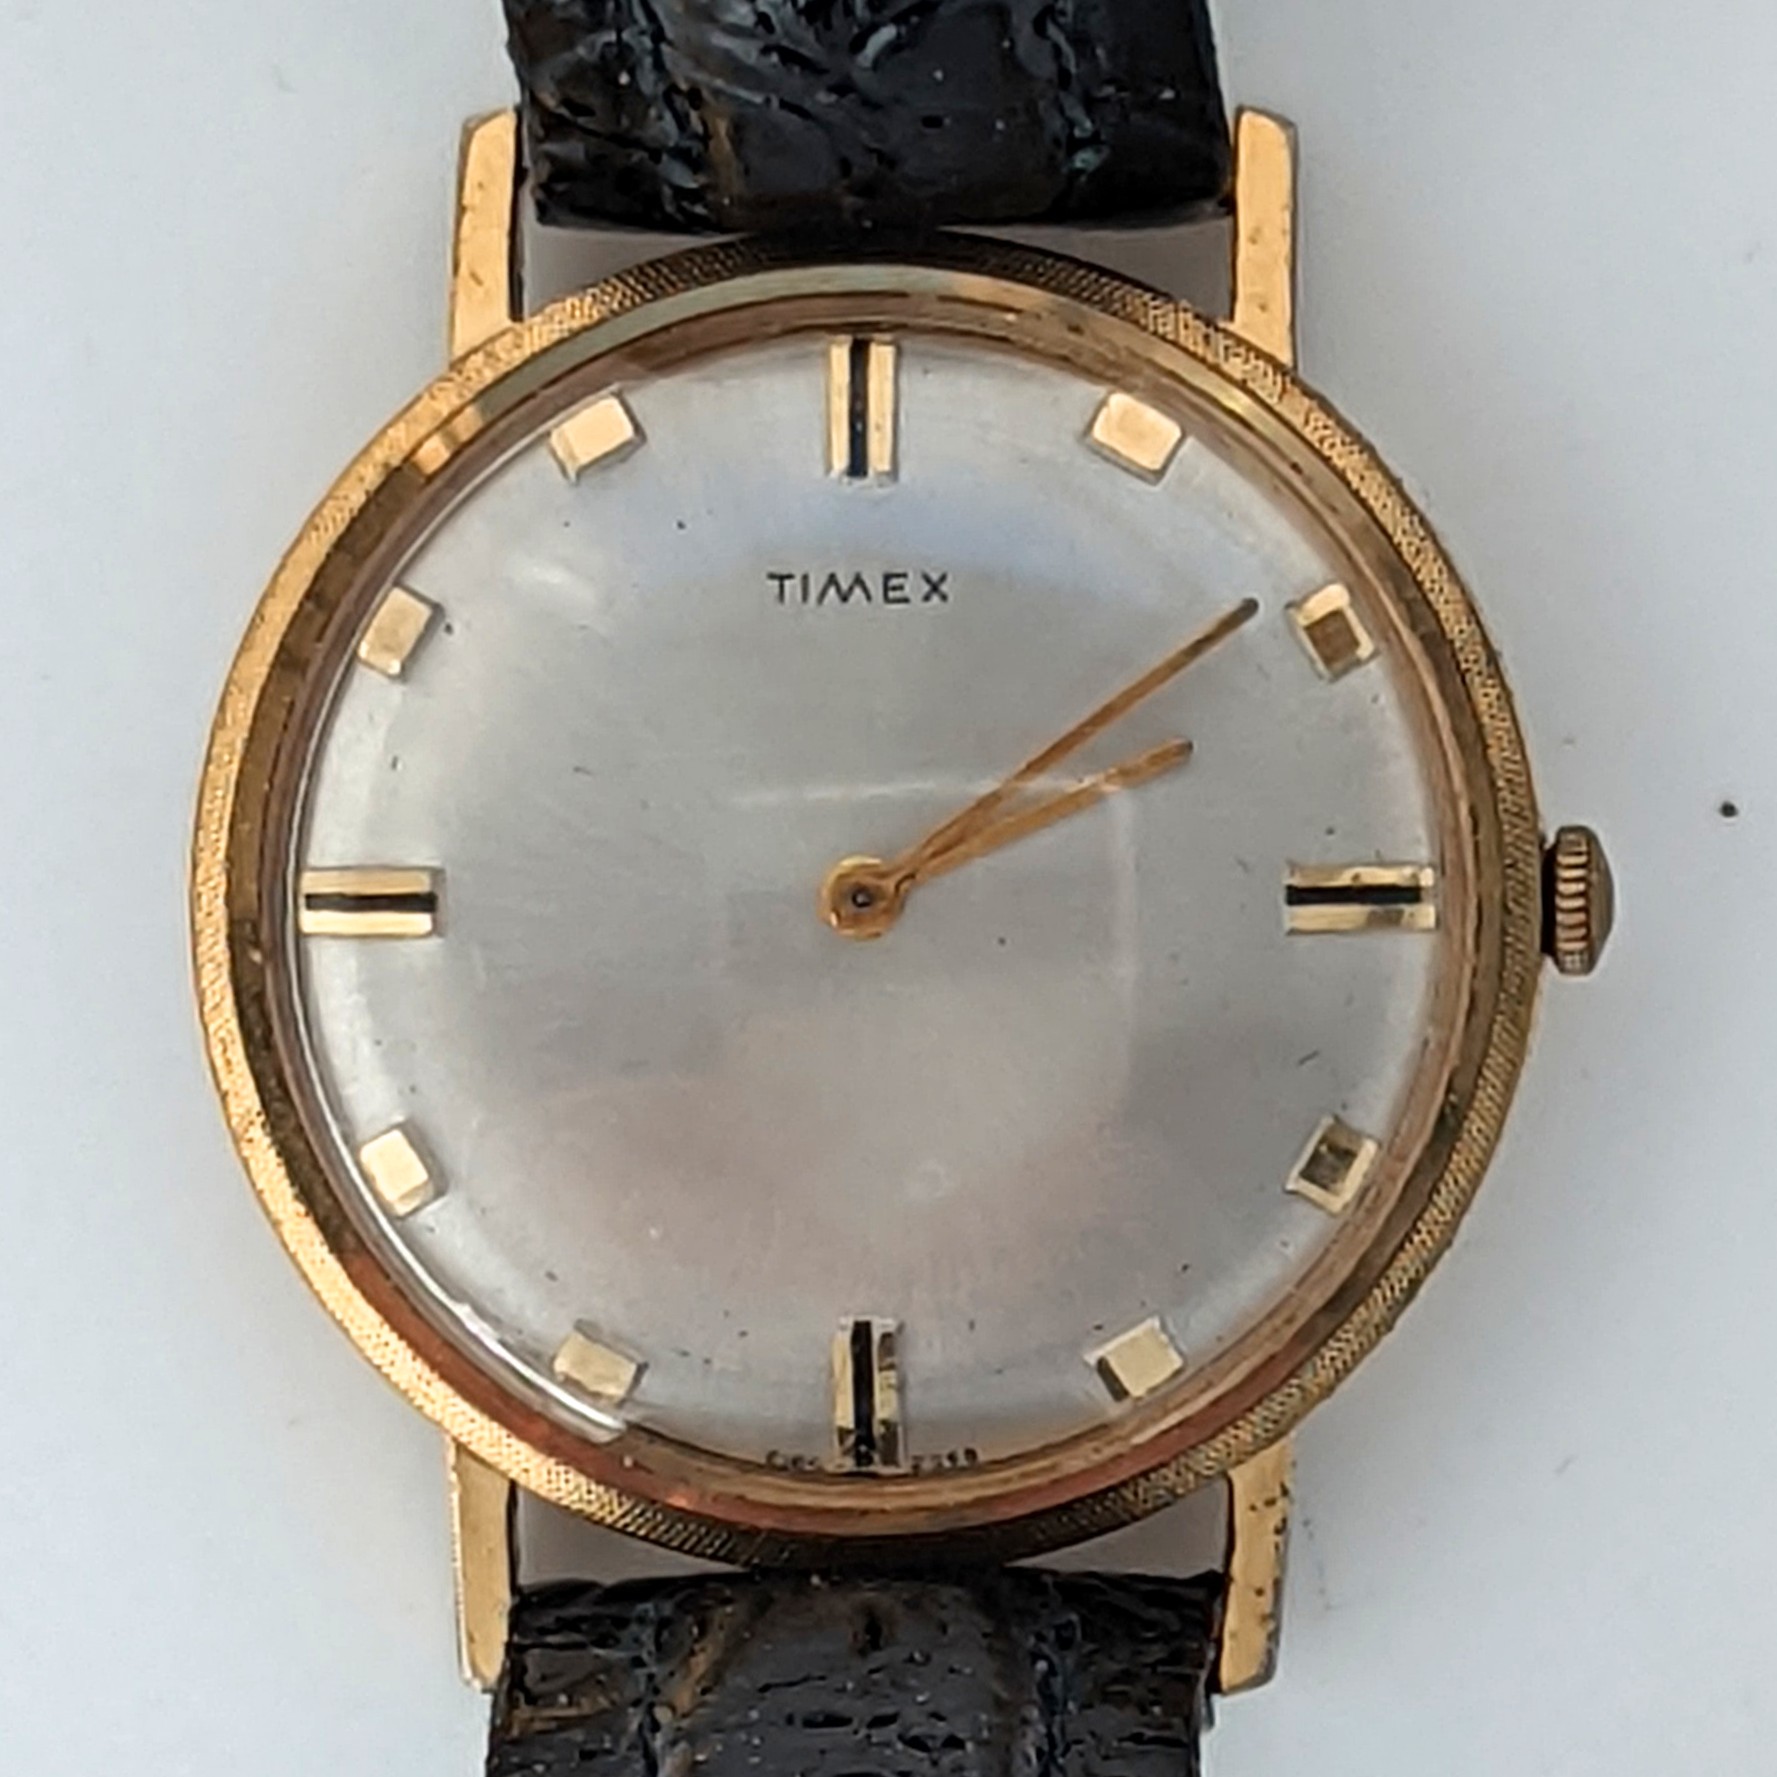 Timex Super Thin 5160 2368 [1968]